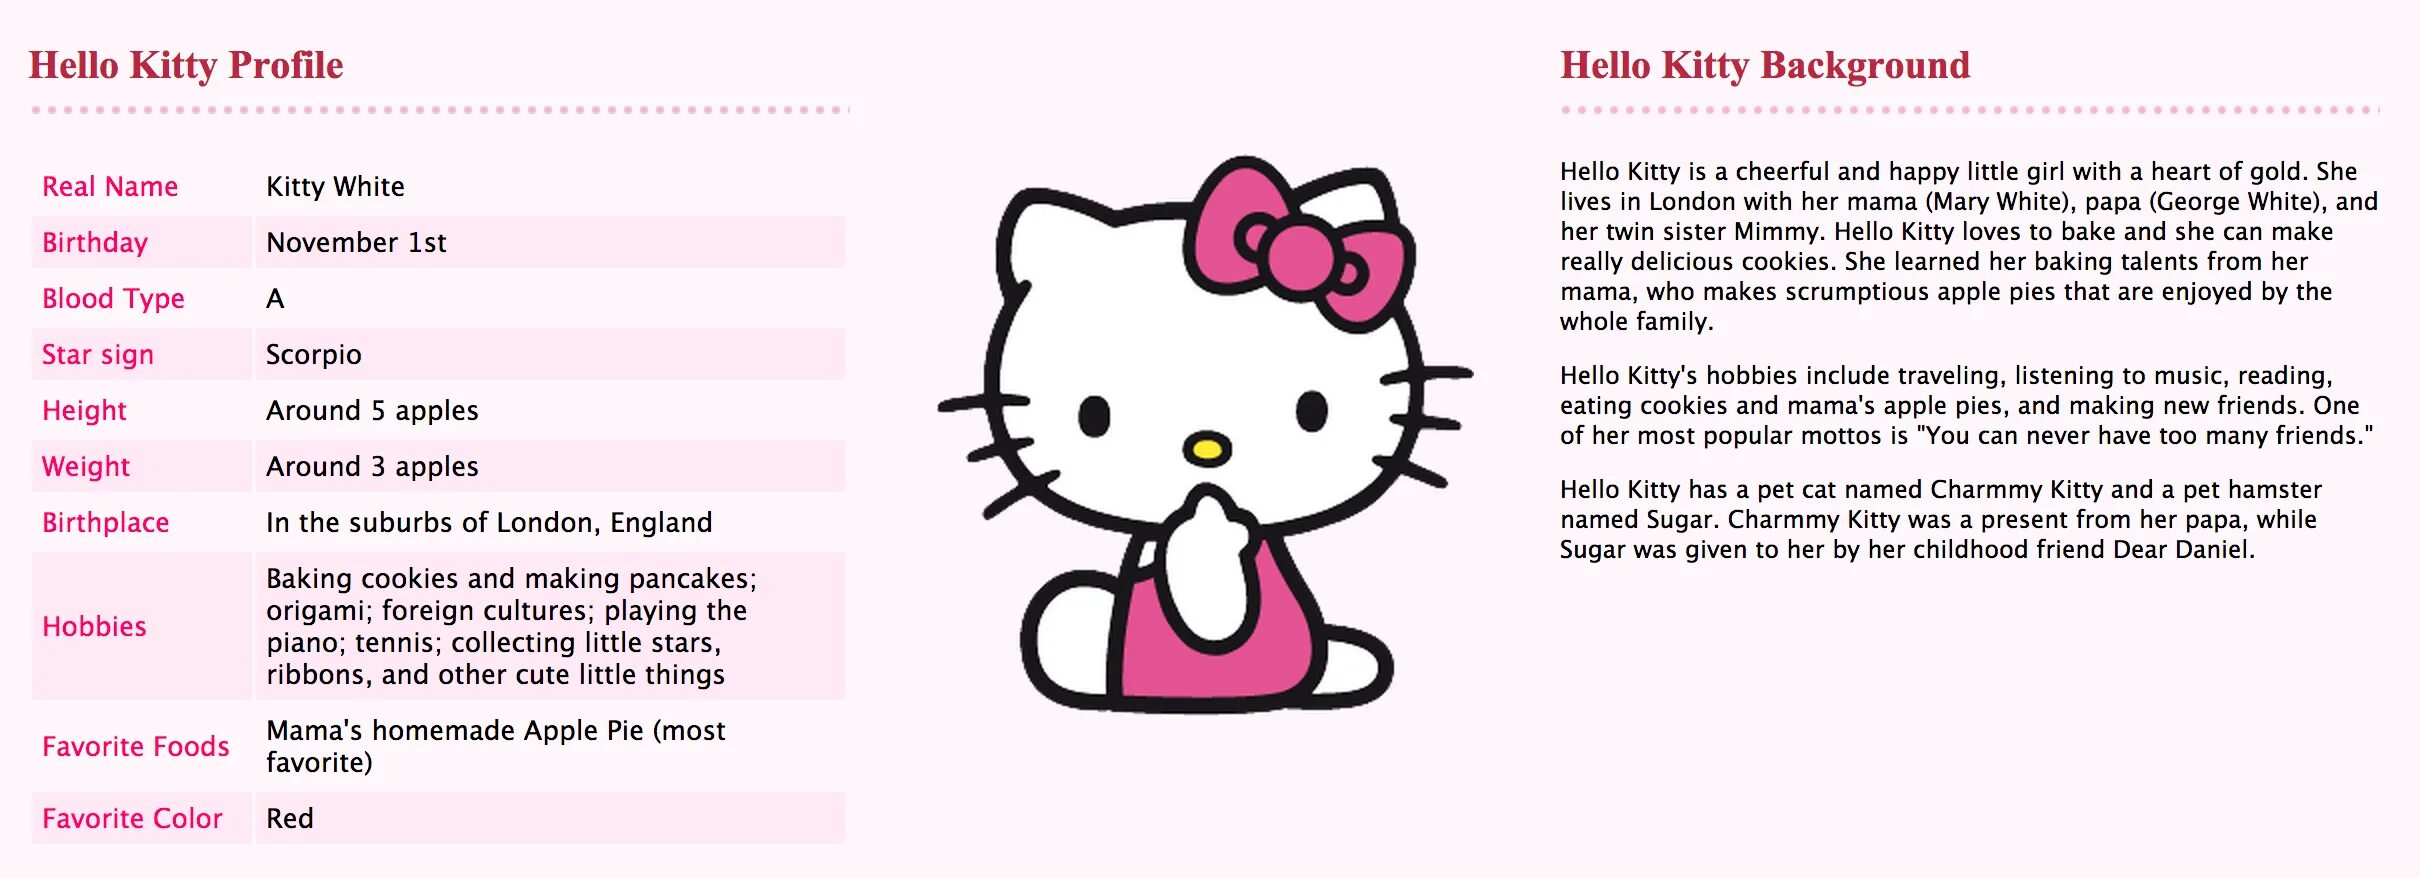 Хеллоу найти. Хеллоу Китти имена. Hello Kitty персонажи с именами. Hello Kitty с описанием. Хеллоу Китти и друзья имена.